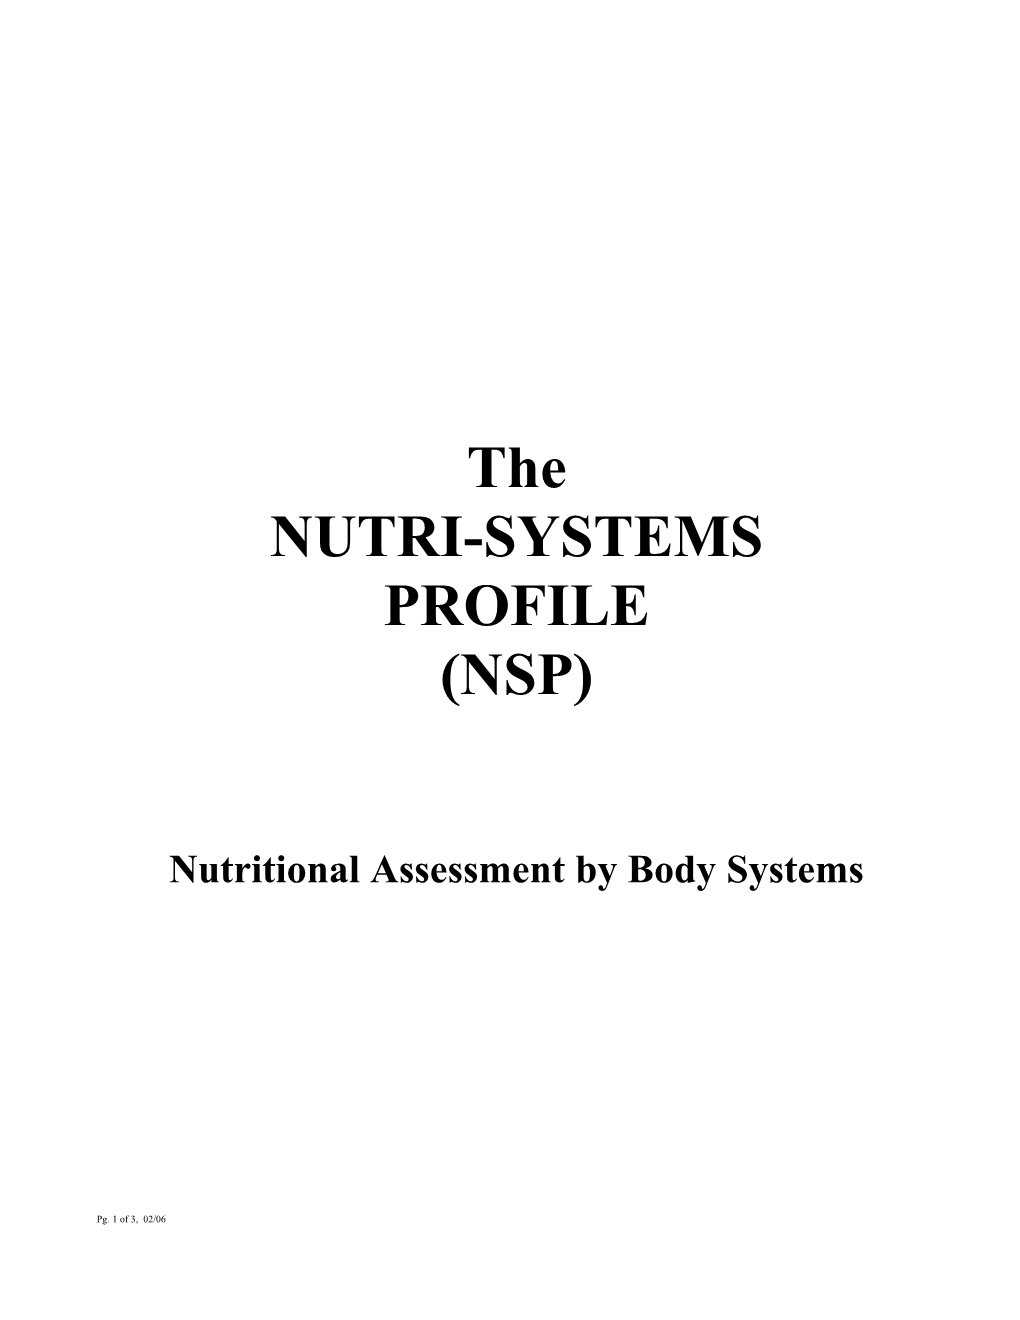 Nutri-Systems Profile